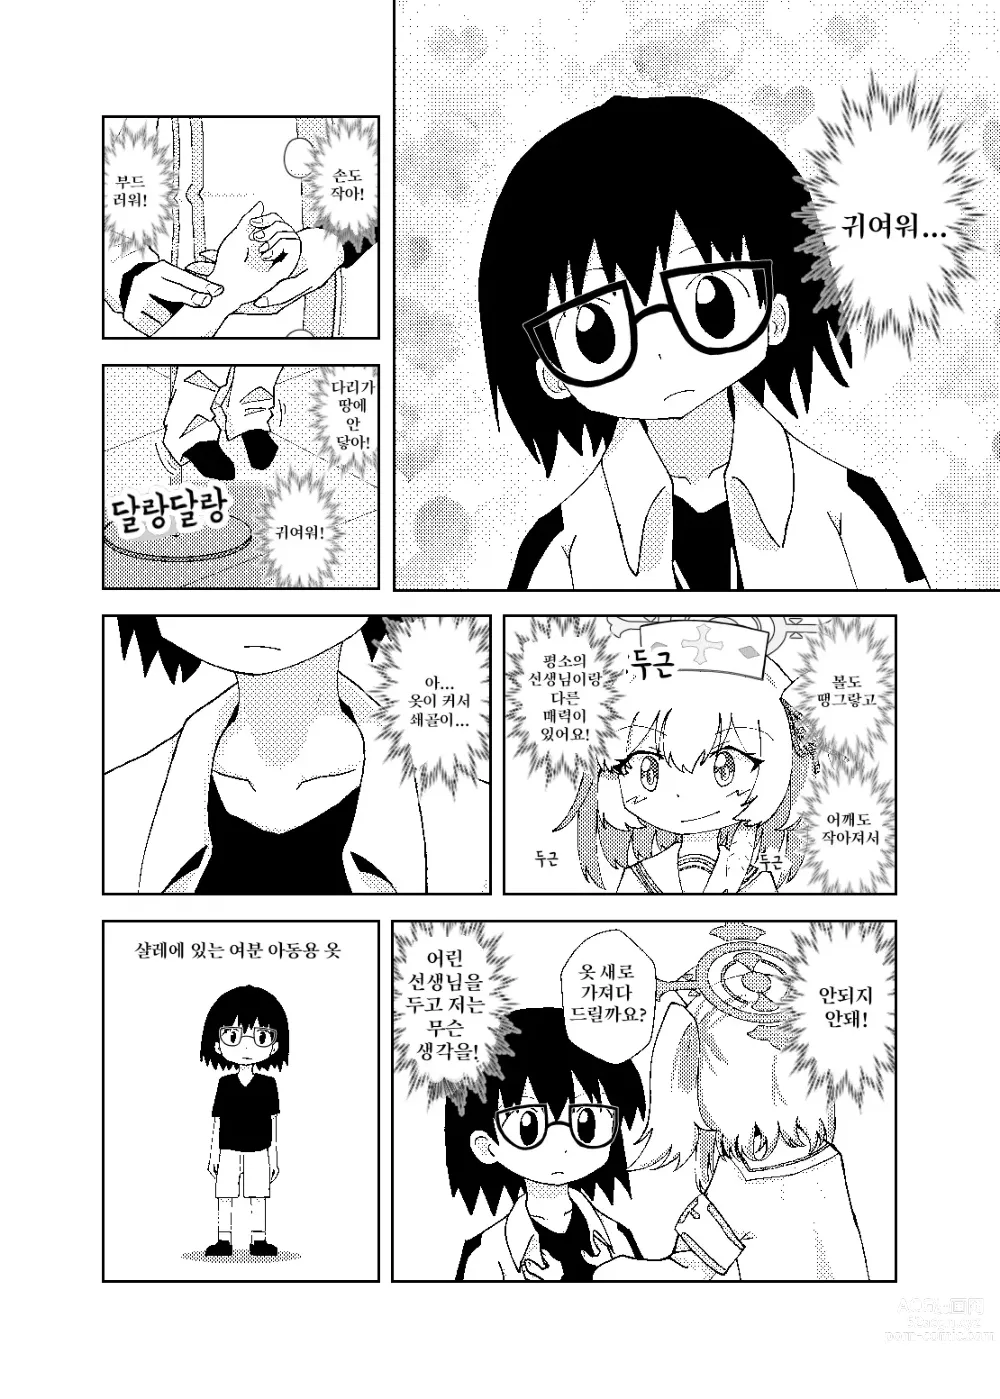 Page 4 of doujinshi 세리나가 유아화 선생님을 간호하는 이야기